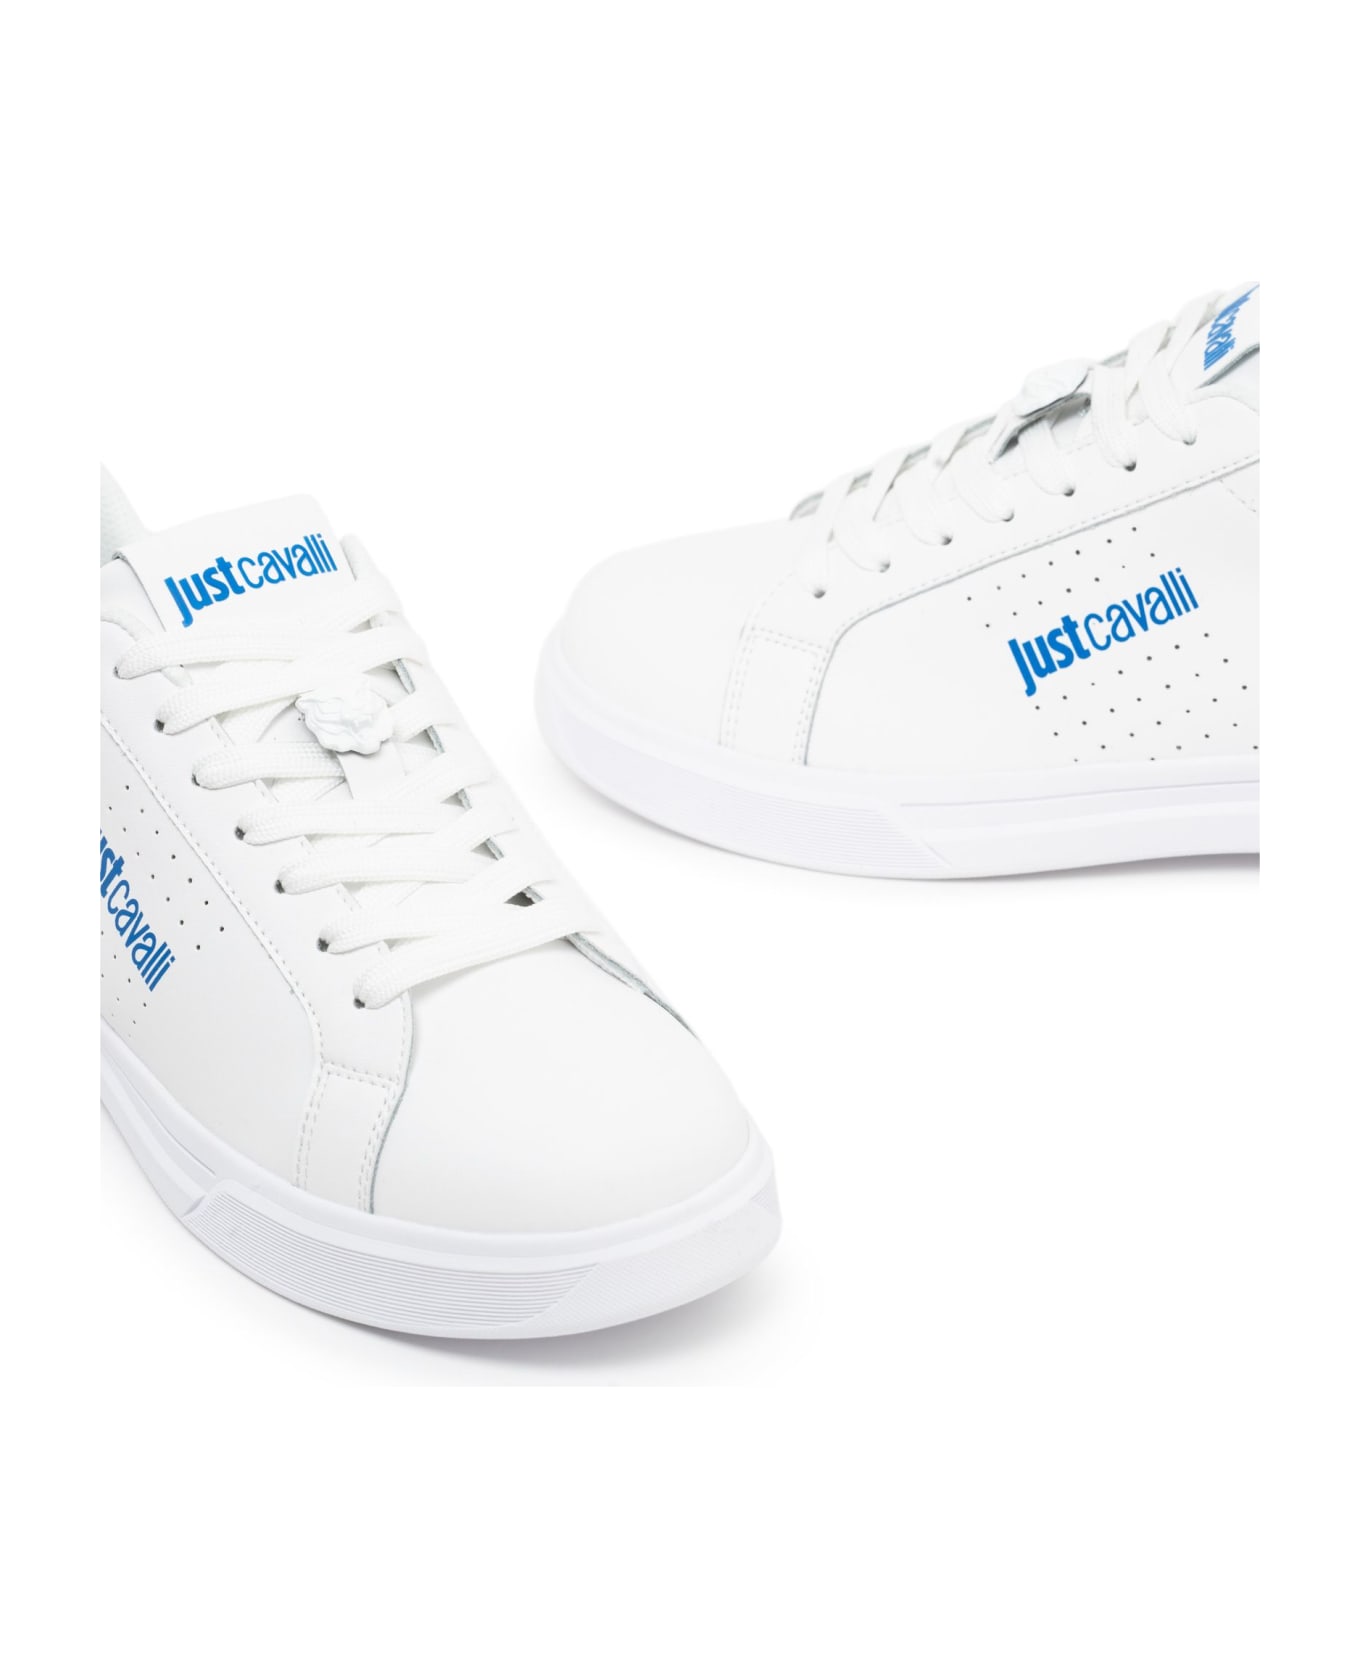 Just Cavalli Men's White Sneakers - White